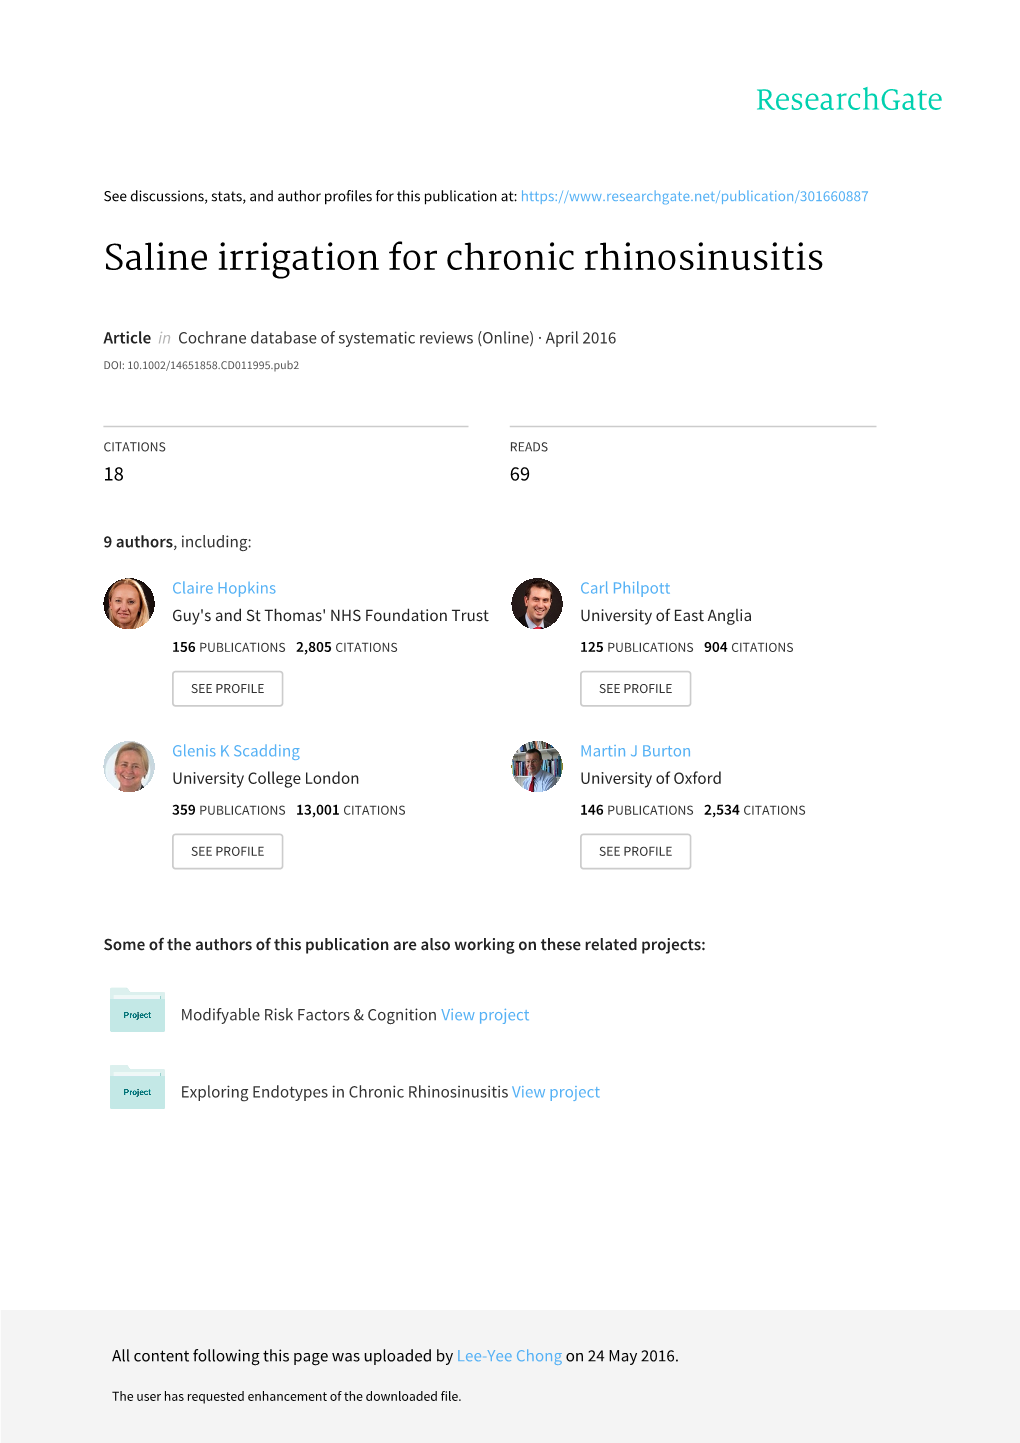 Saline Irrigation for Chronic Rhinosinusitis